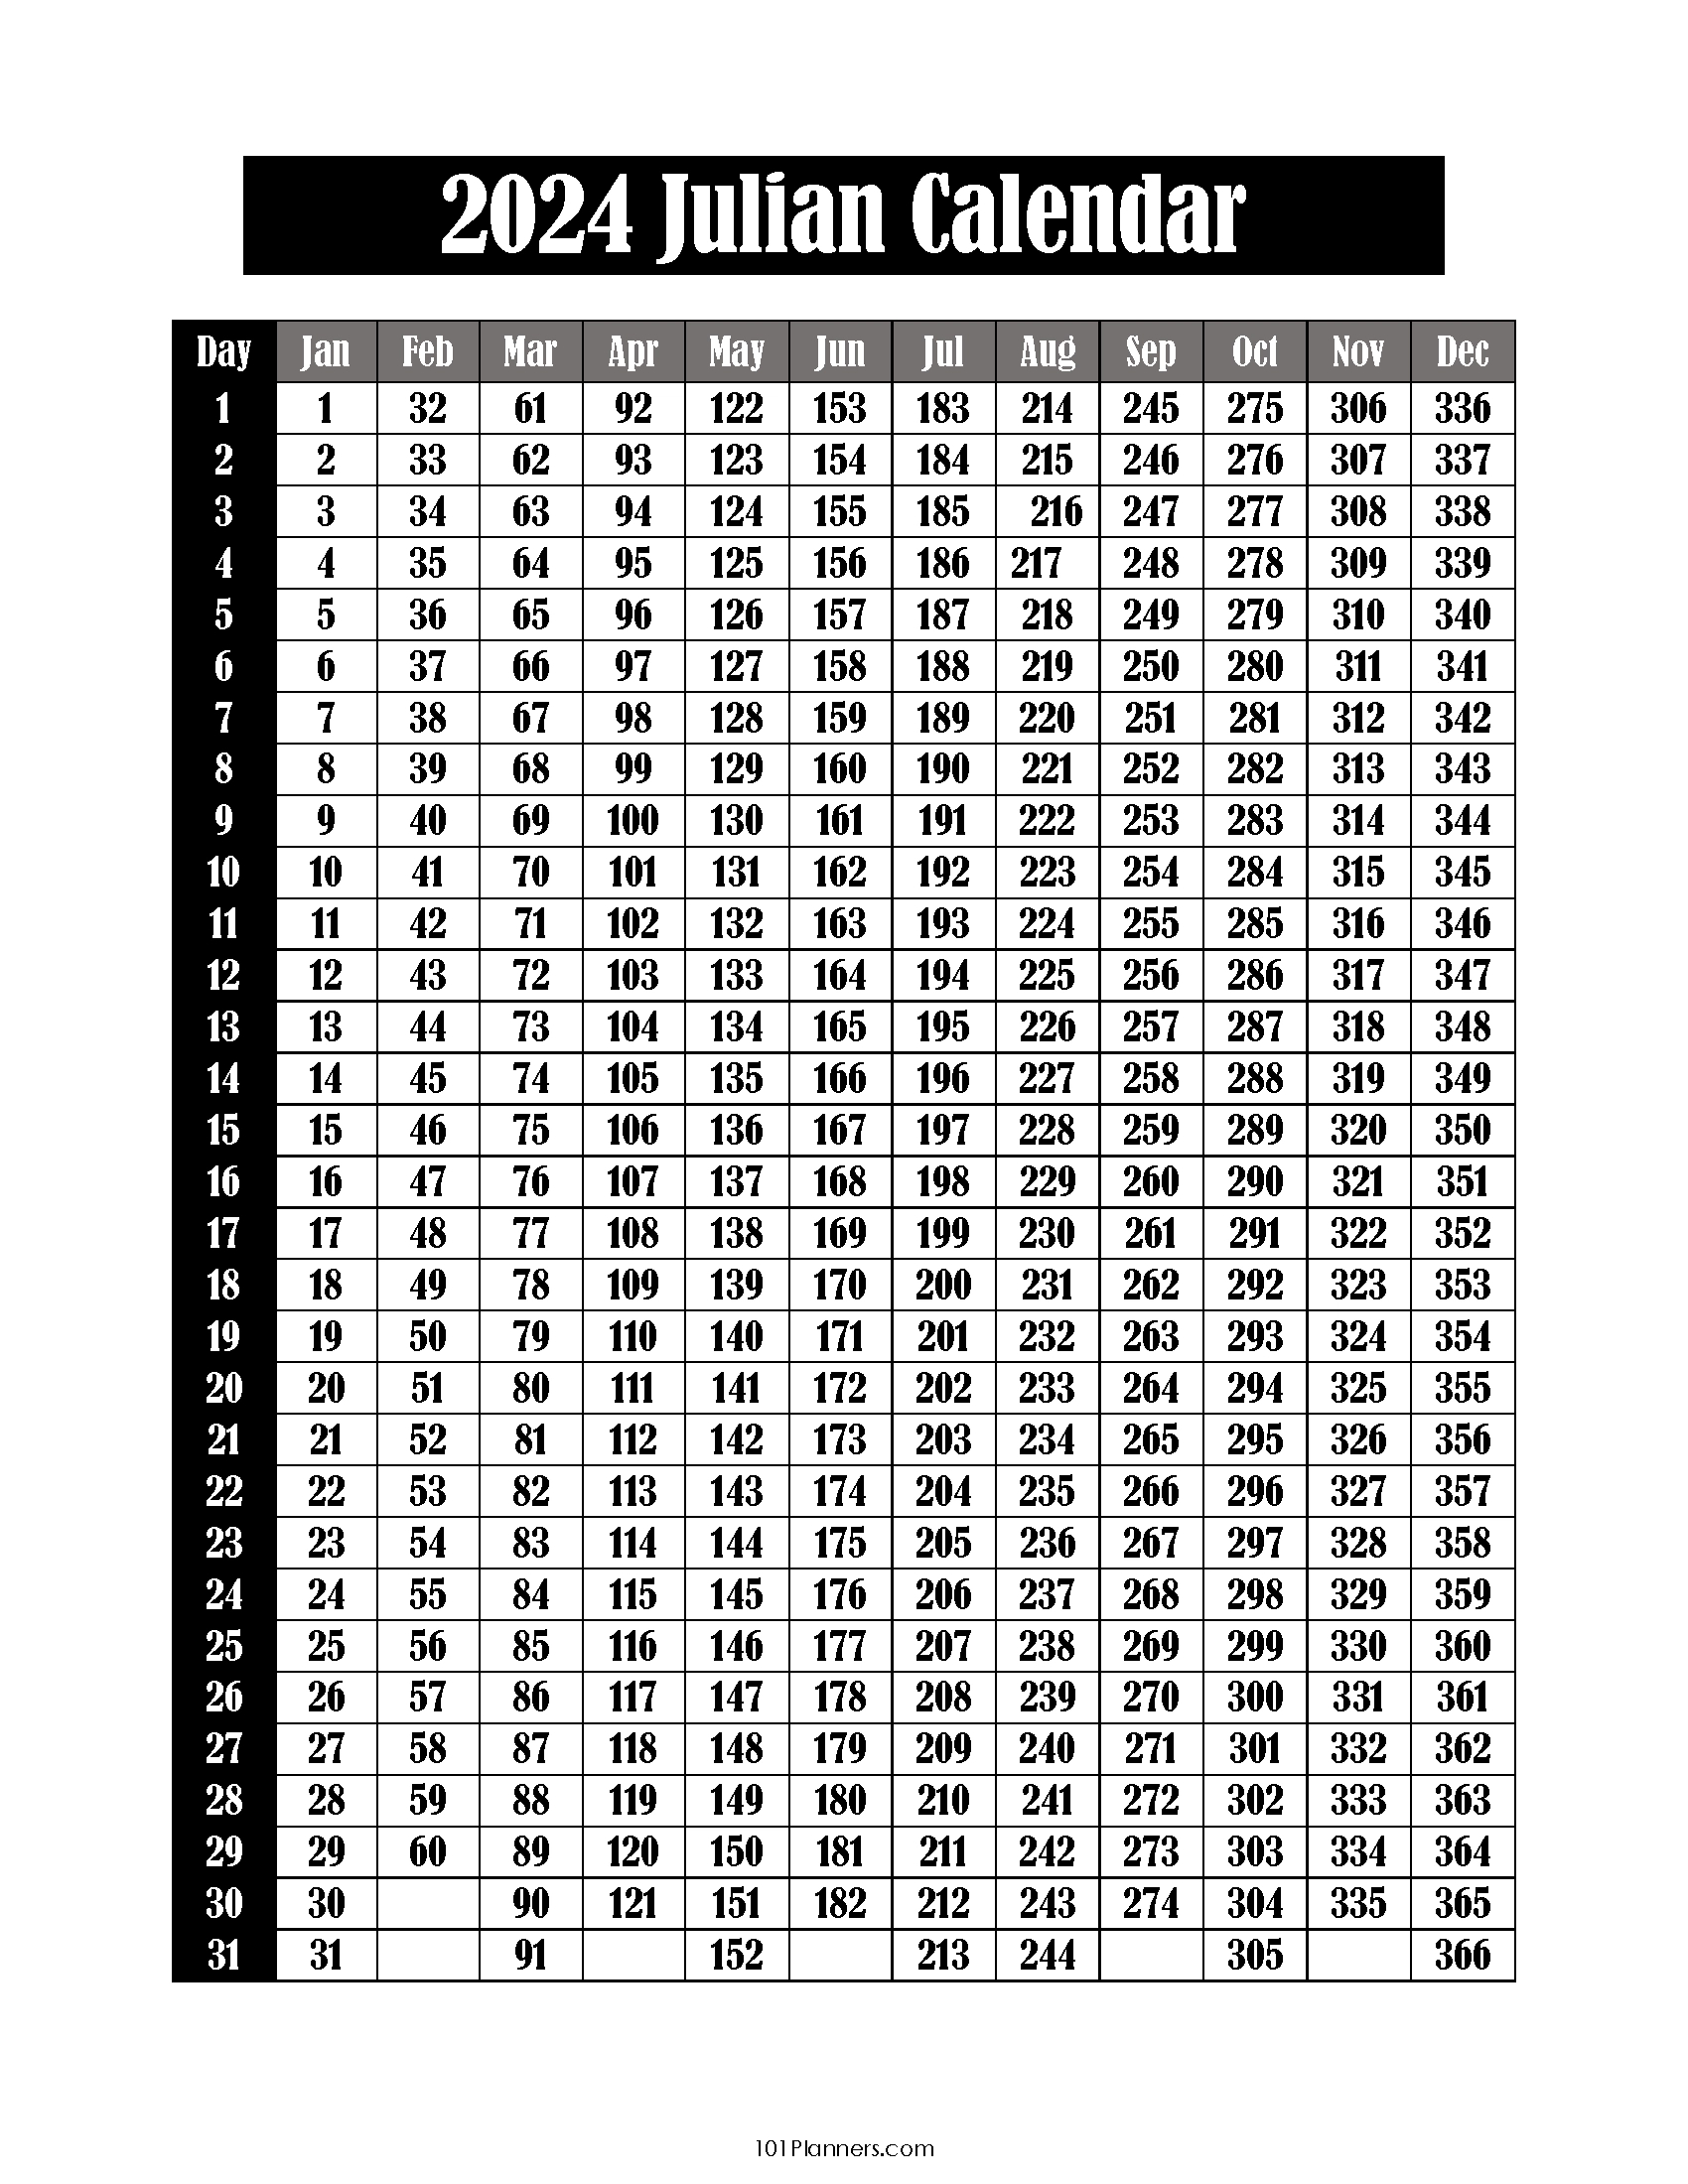 Free Printable Julian Calendar 2024-2032 | Julian Date Today | Printable Calendar 2024 With Julian Dates